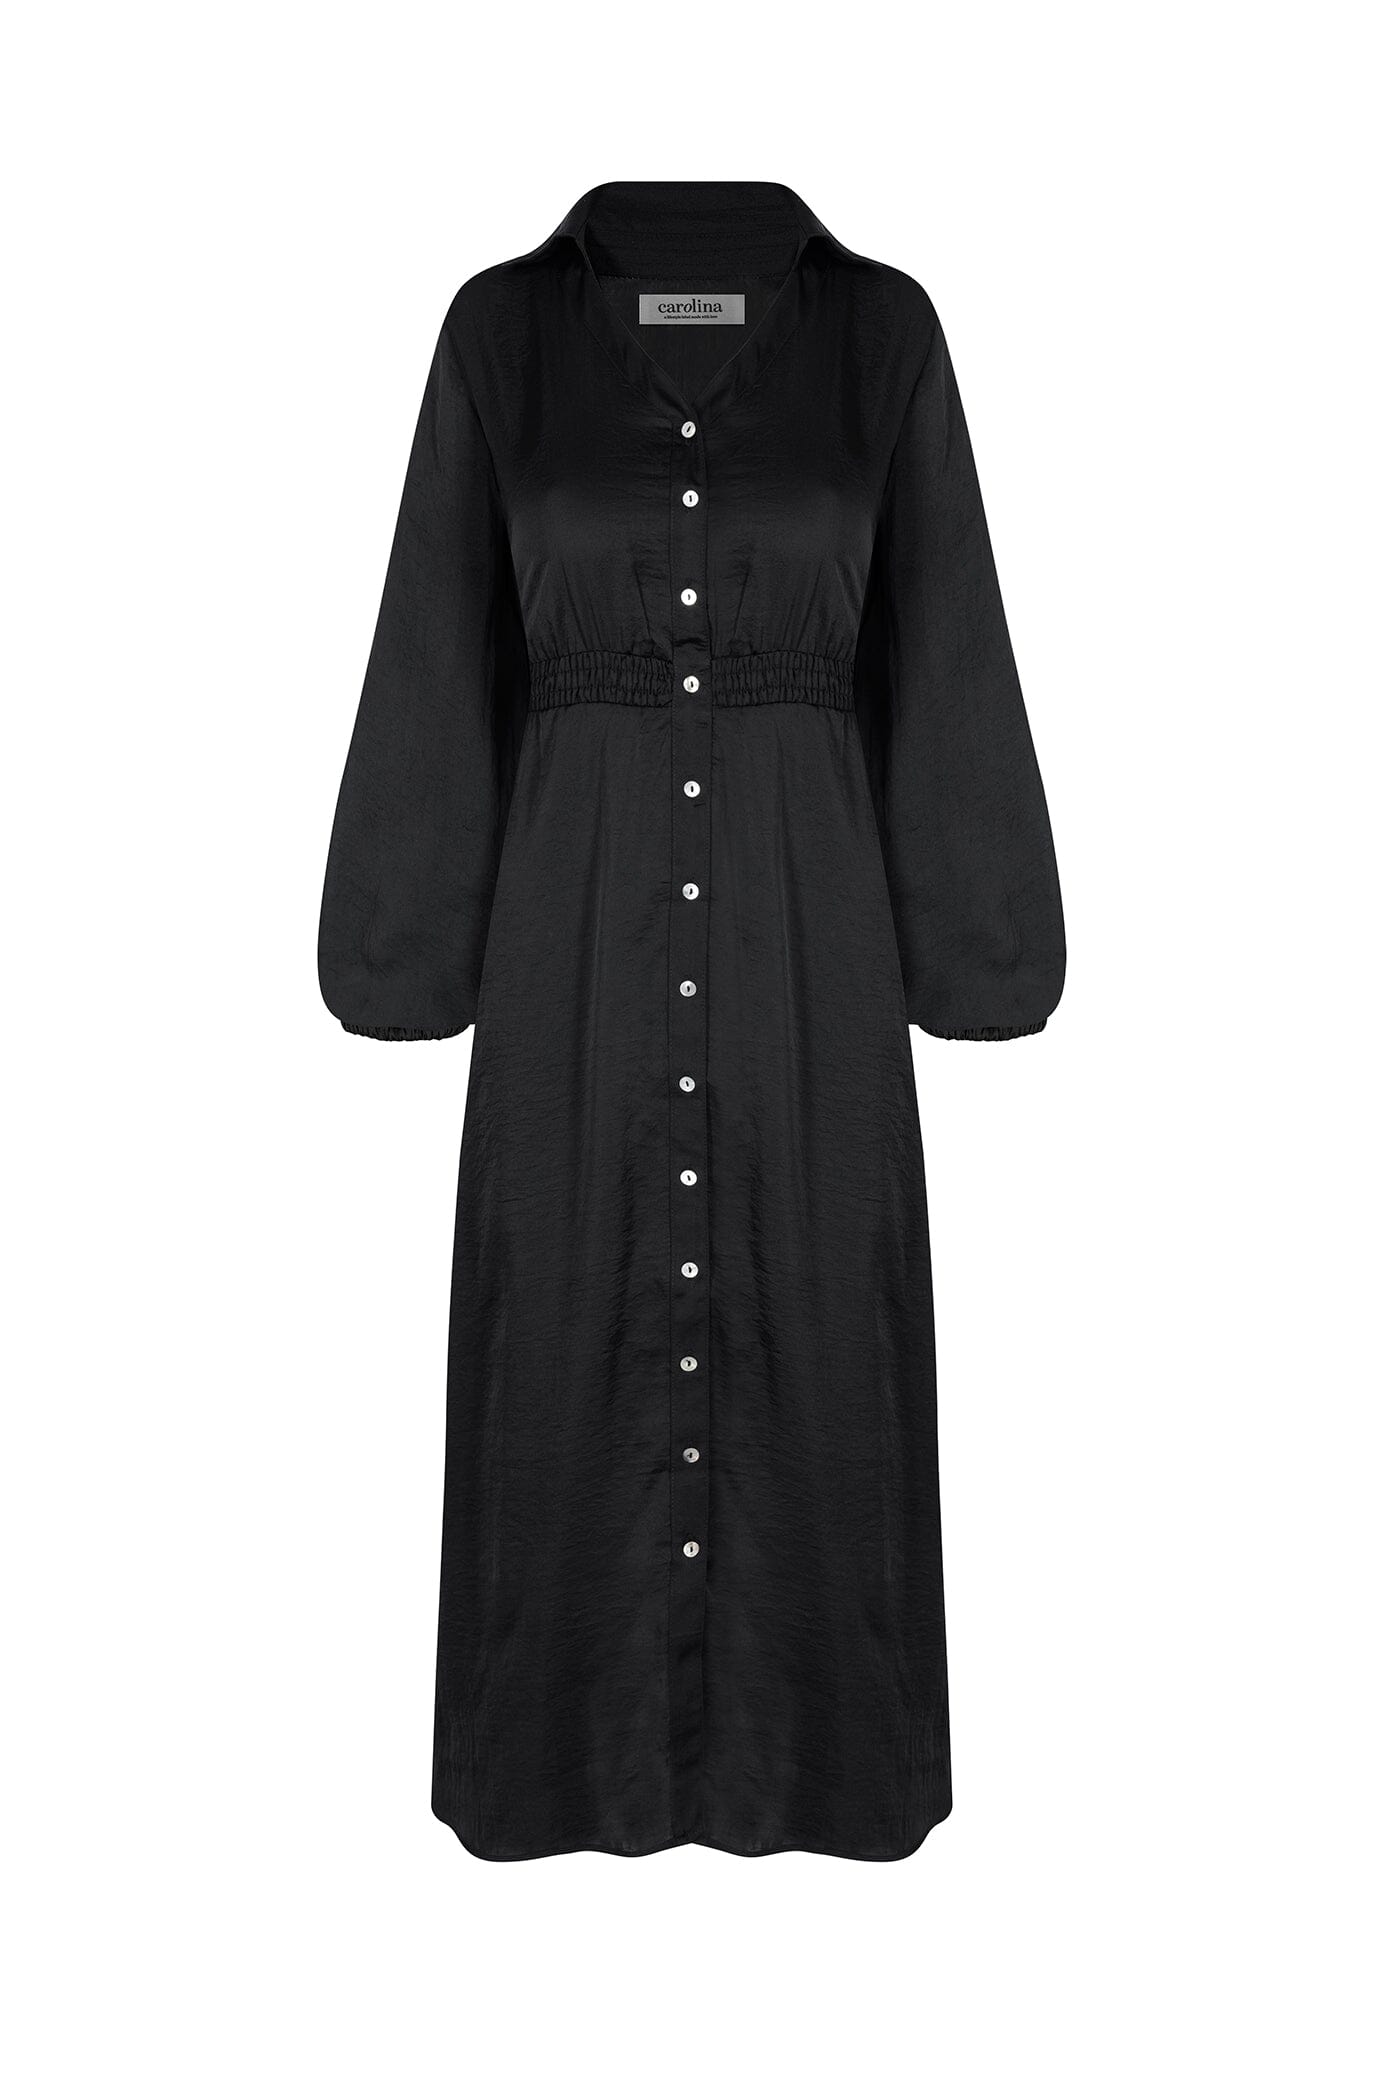 Georgina Long Sleeve Dress Black with Collar Dresses | Long Sleeve